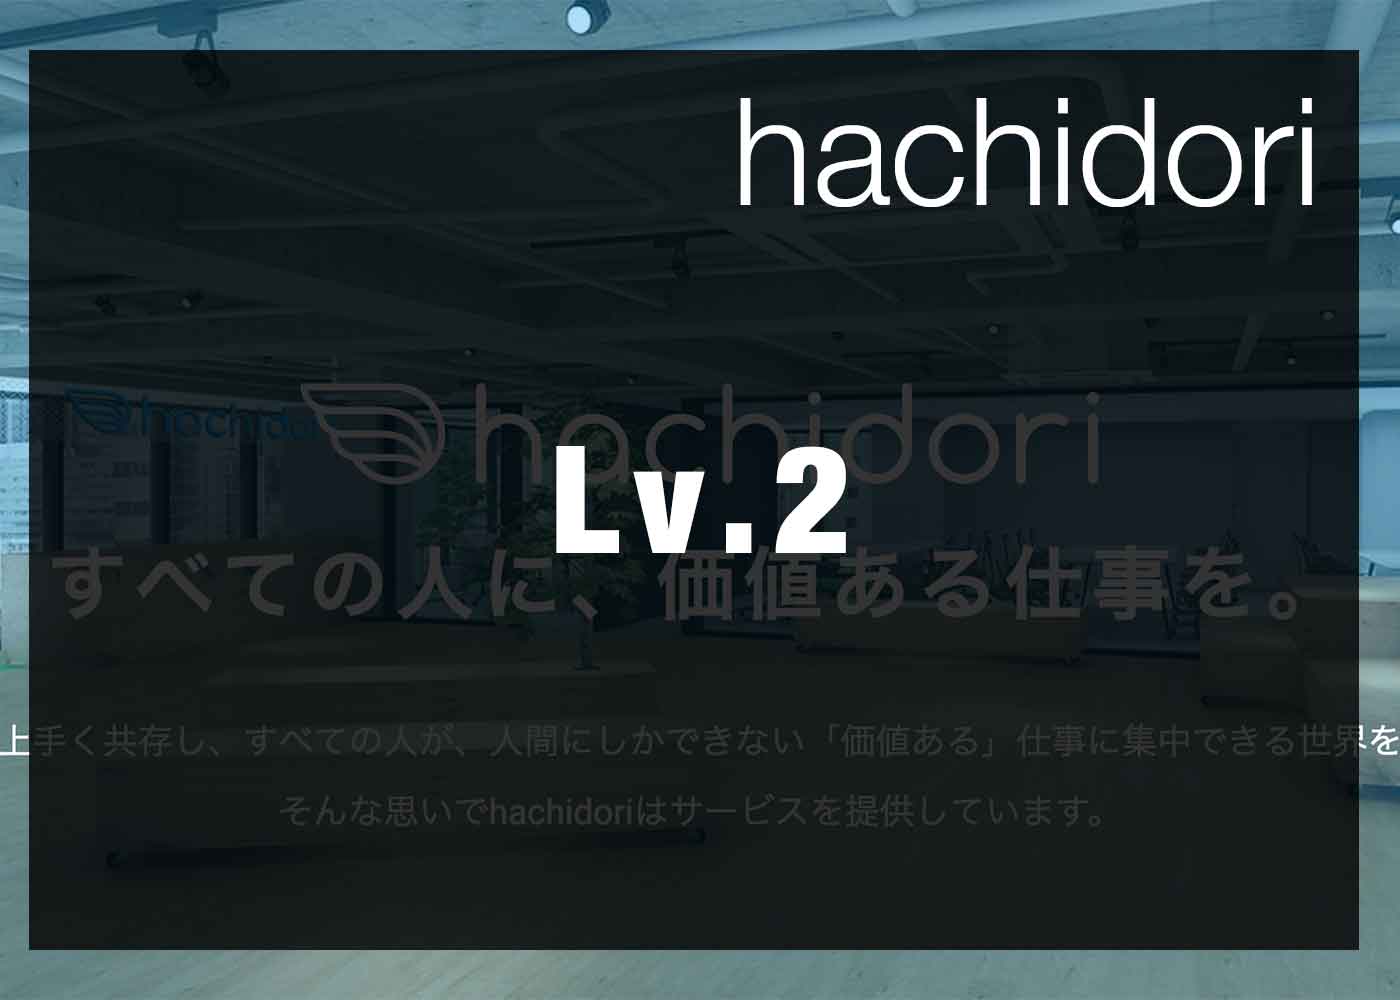 Lv.2: hachidoriのクエリー機能の基本的な使い方